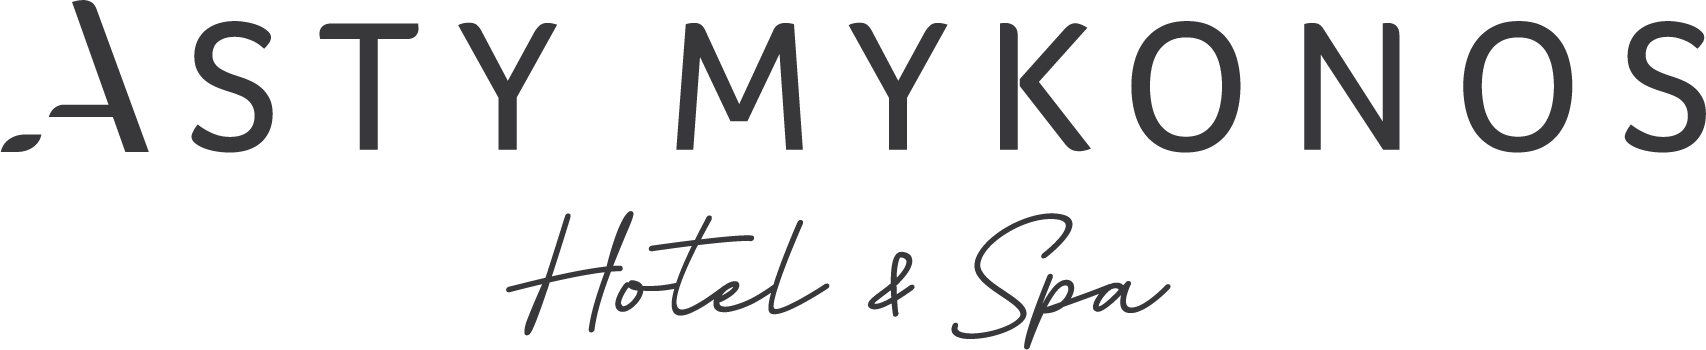 ASTY Mykonos Hotel & Spa